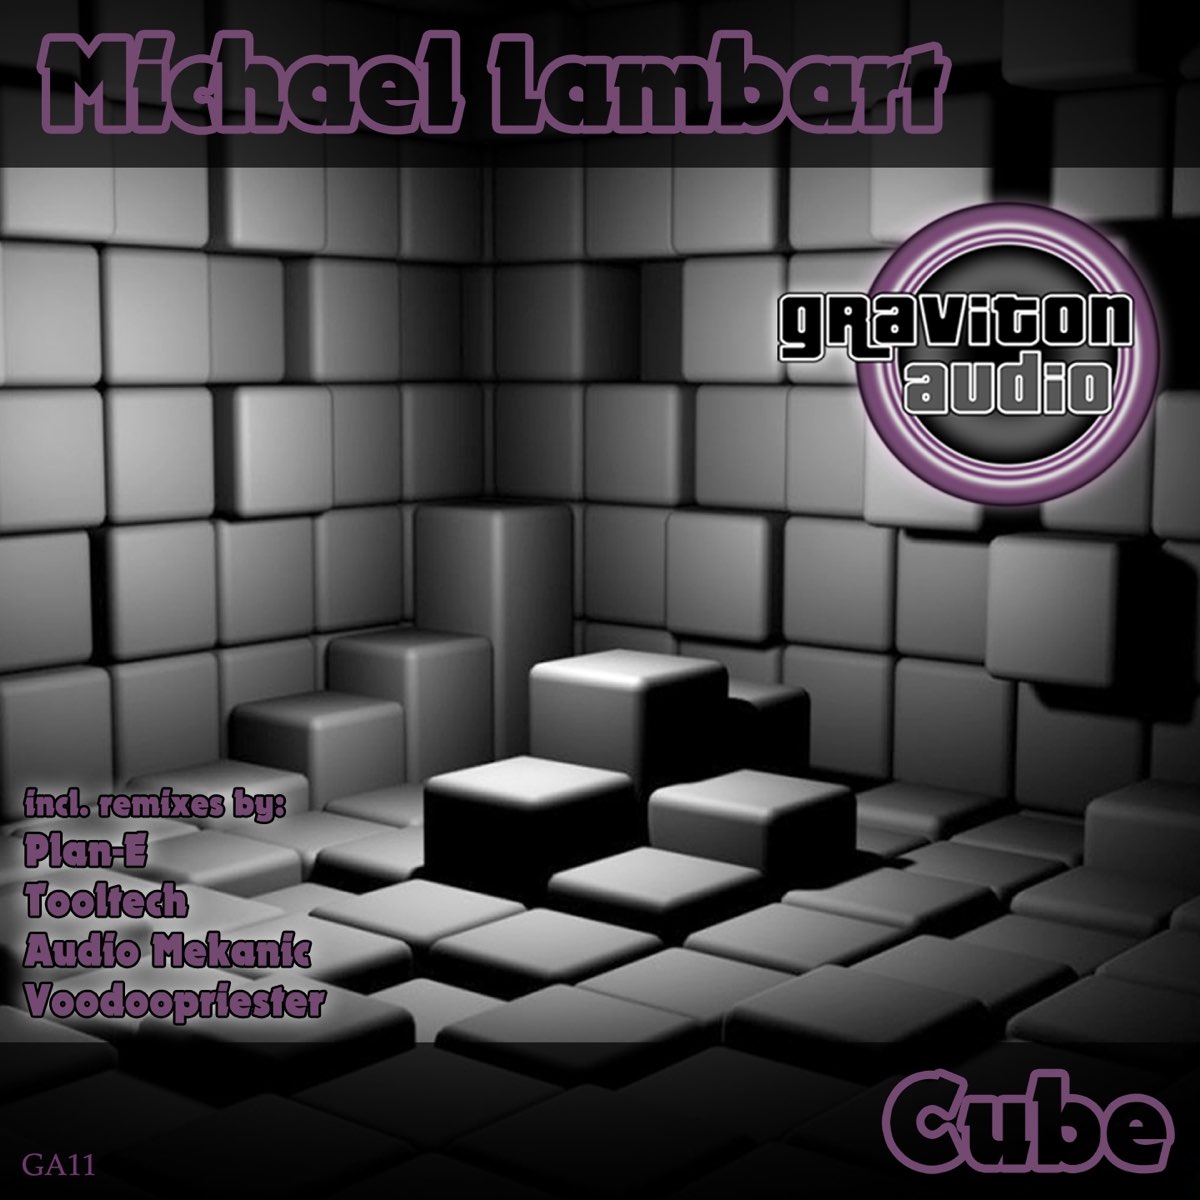 Cube remix